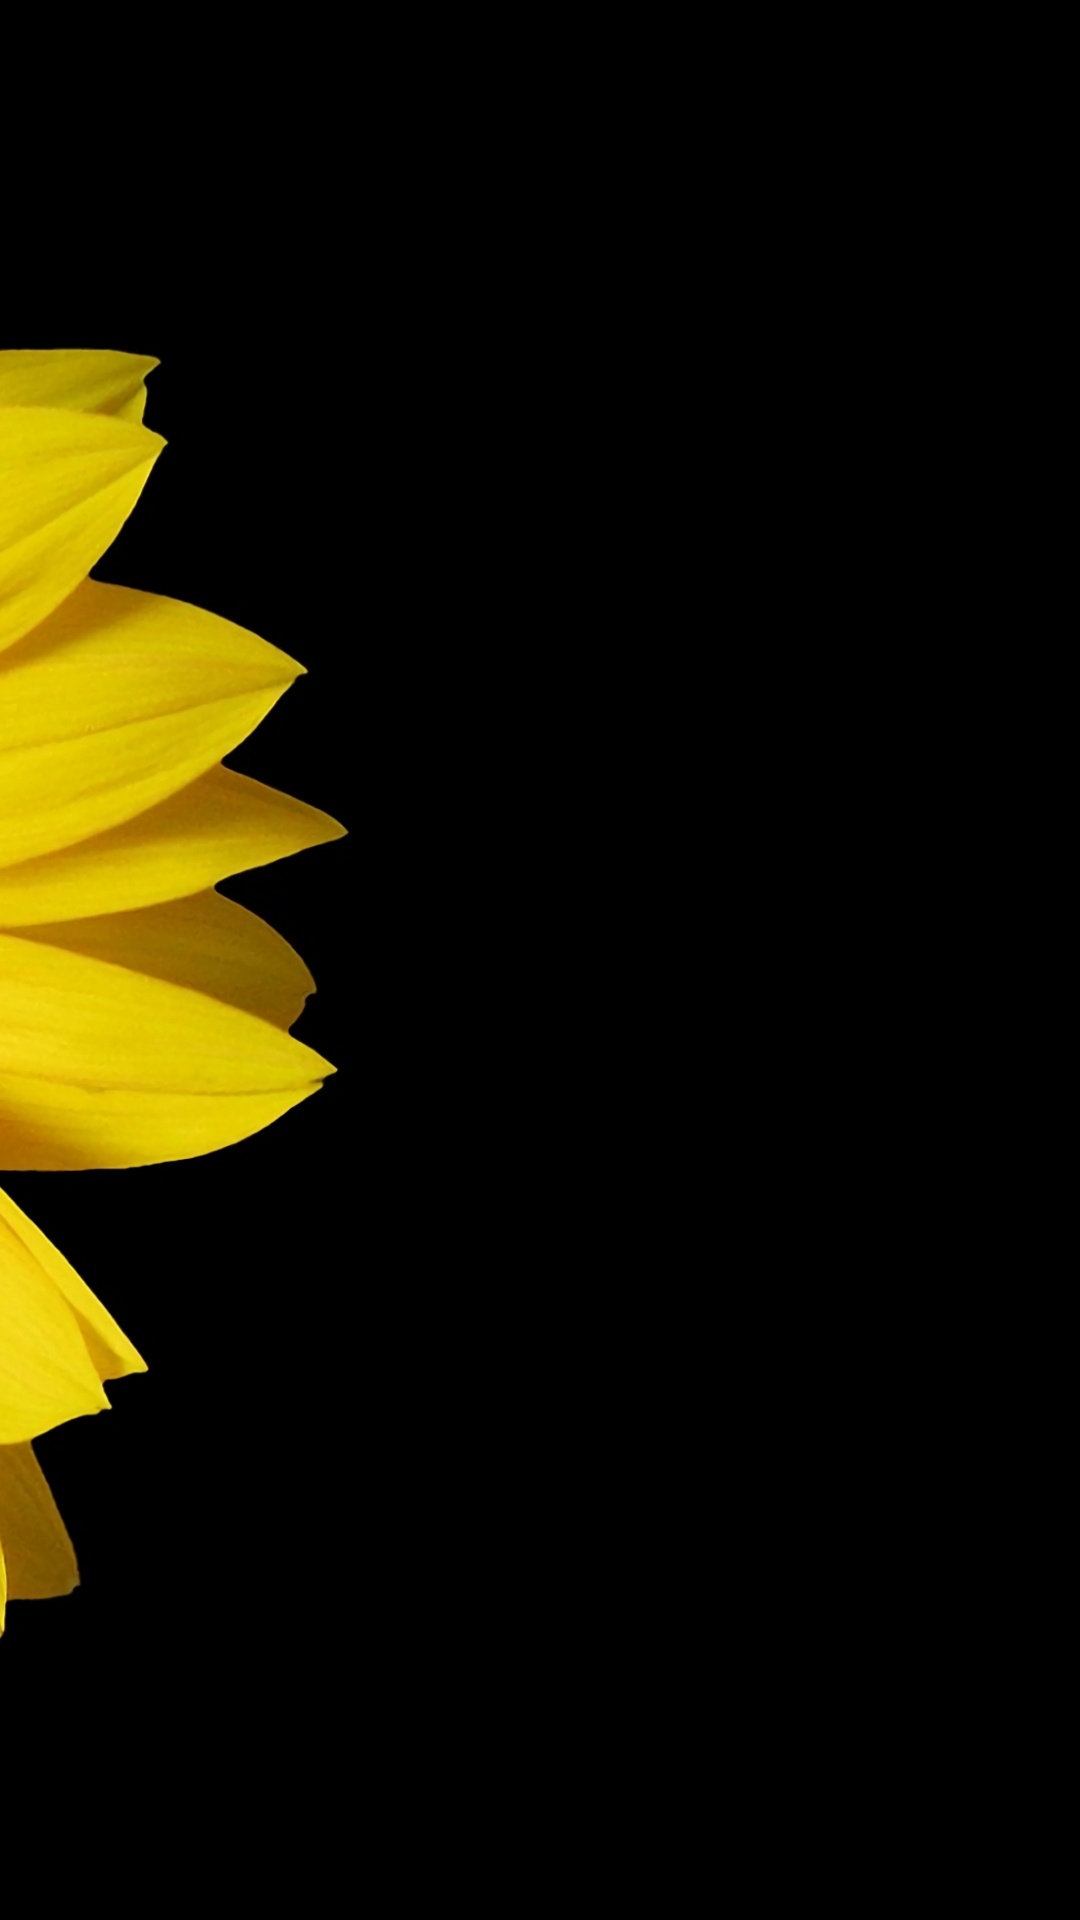 Black Sunflower Wallpaper Images - Free Download on Freepik